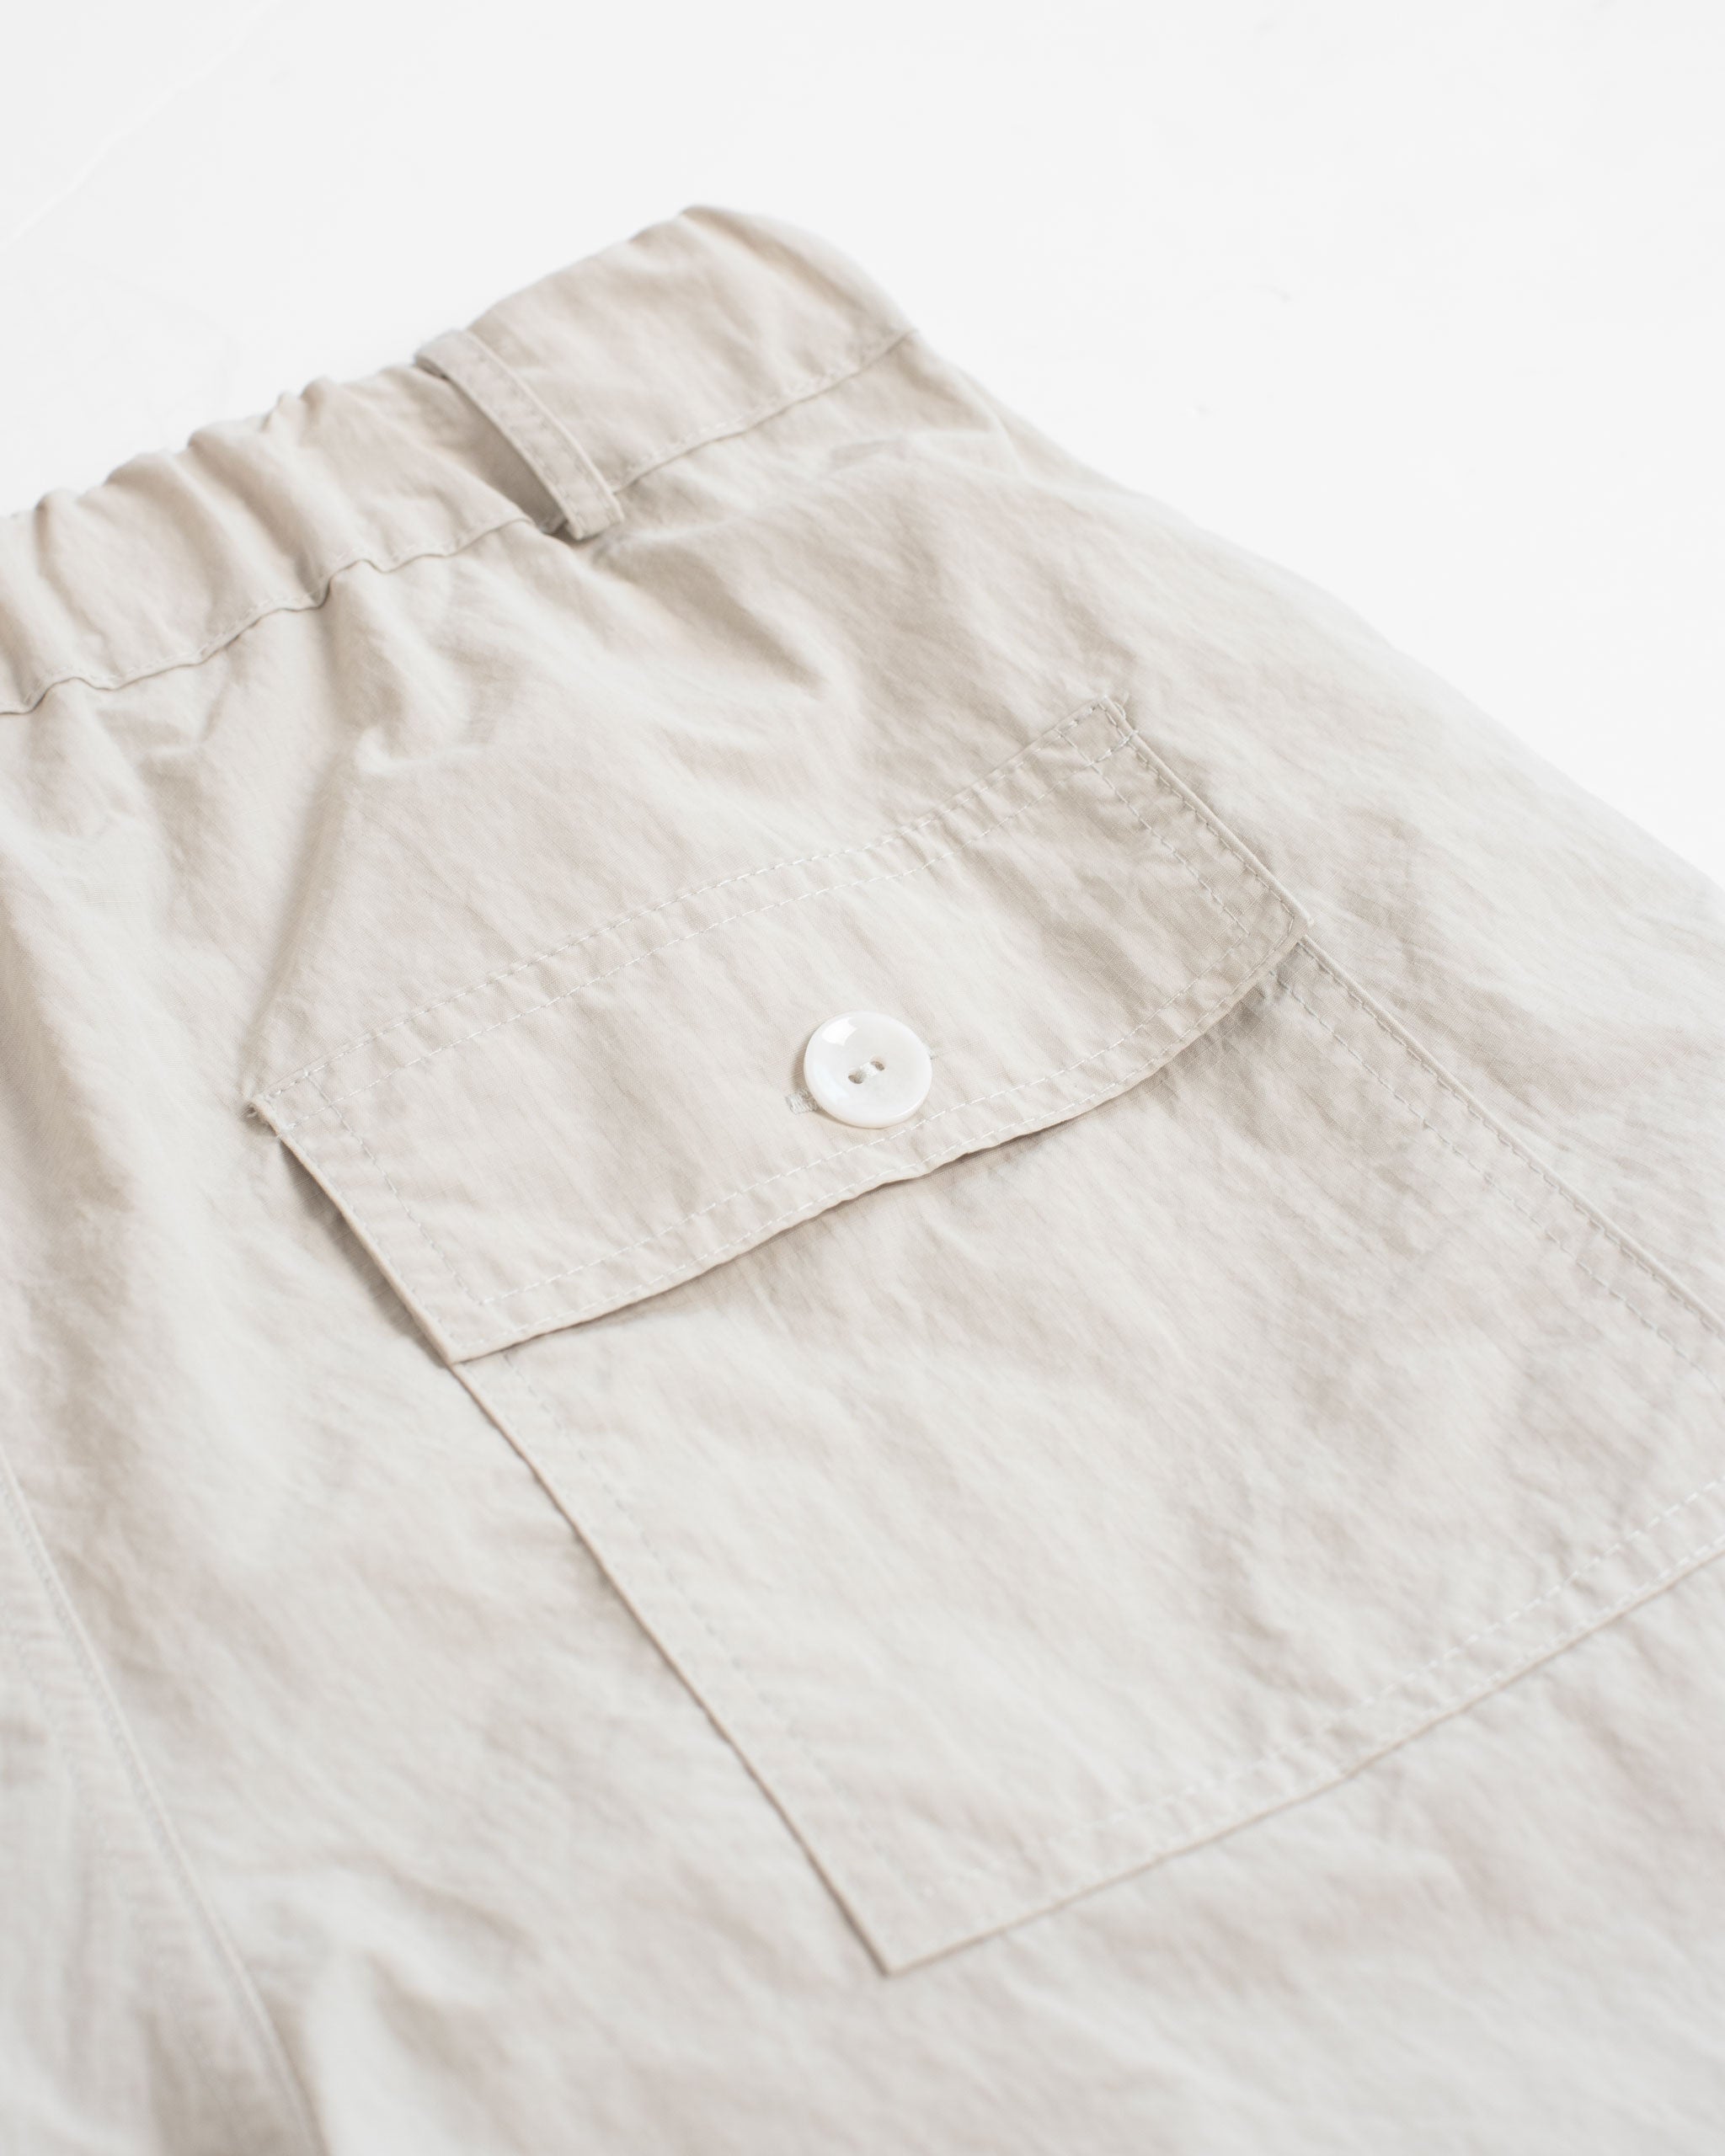 back pocket shot of Cream utility shorts in Ripstop nylon fabric